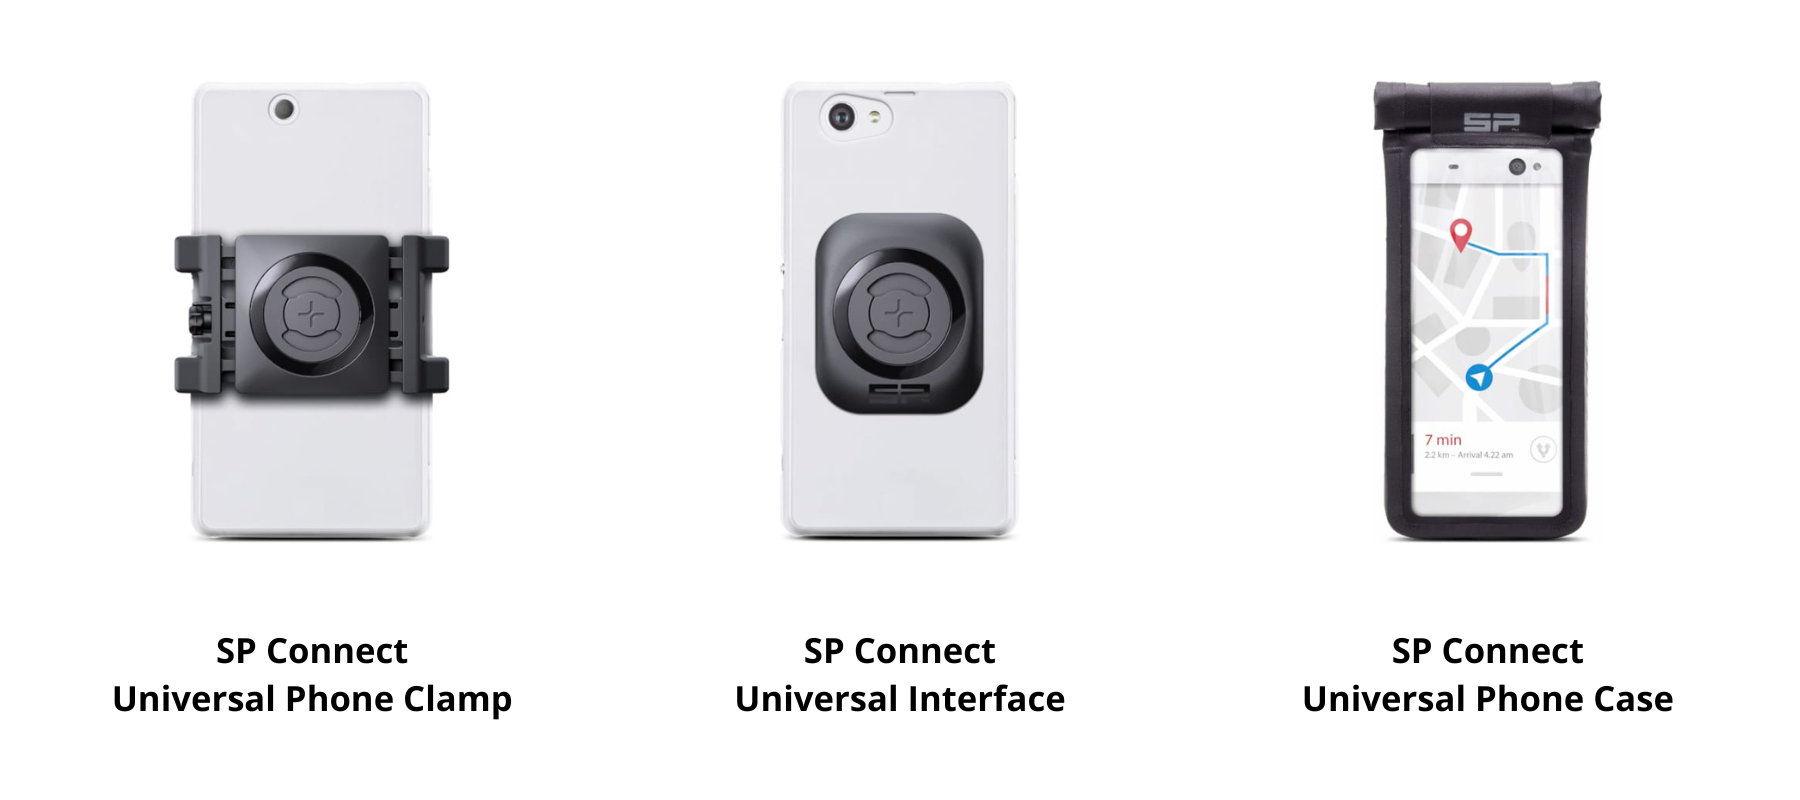 Universal Phone Clamp, Universal Interface & Universal Phone Case